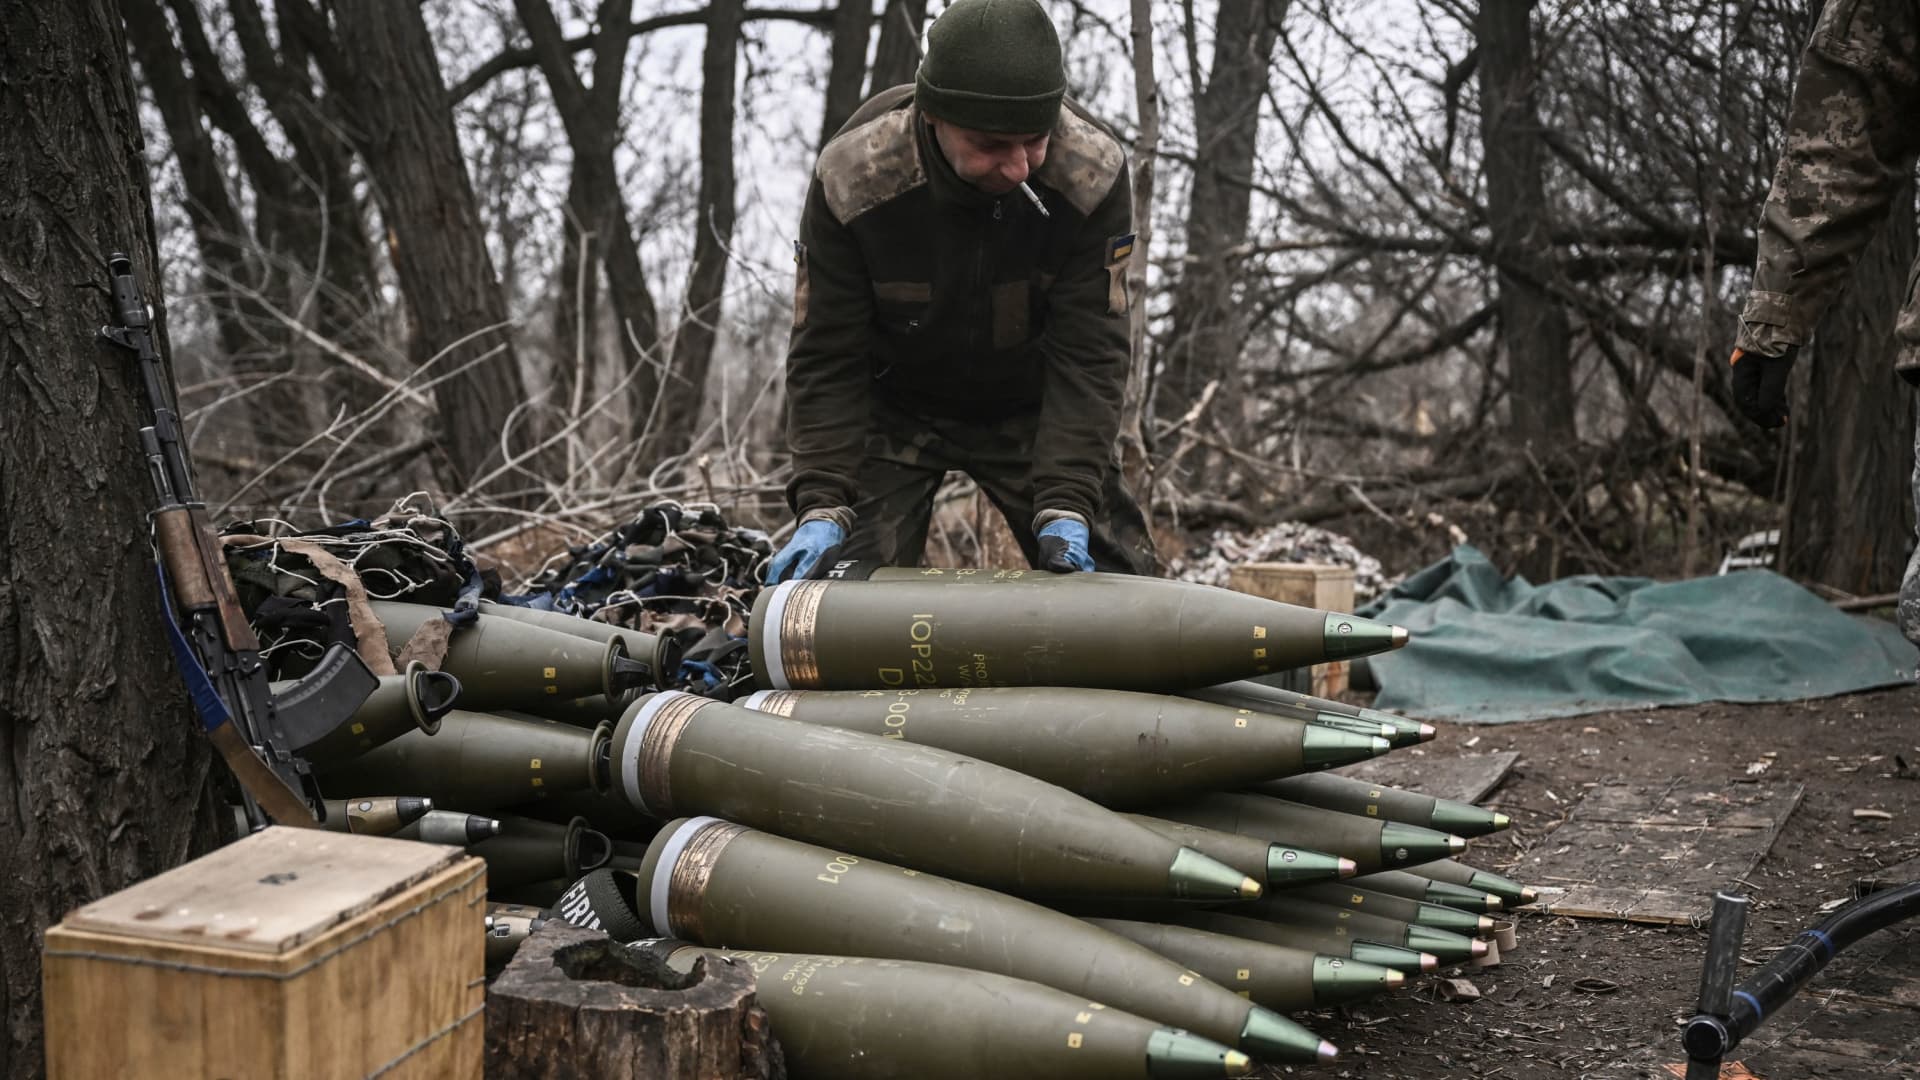 A Ukrainian serviceman prepares 155mm artillery shells near Bakhmut, eastern Ukraine, on March 17, 2023, amid the Russian invasion of Ukraine. 